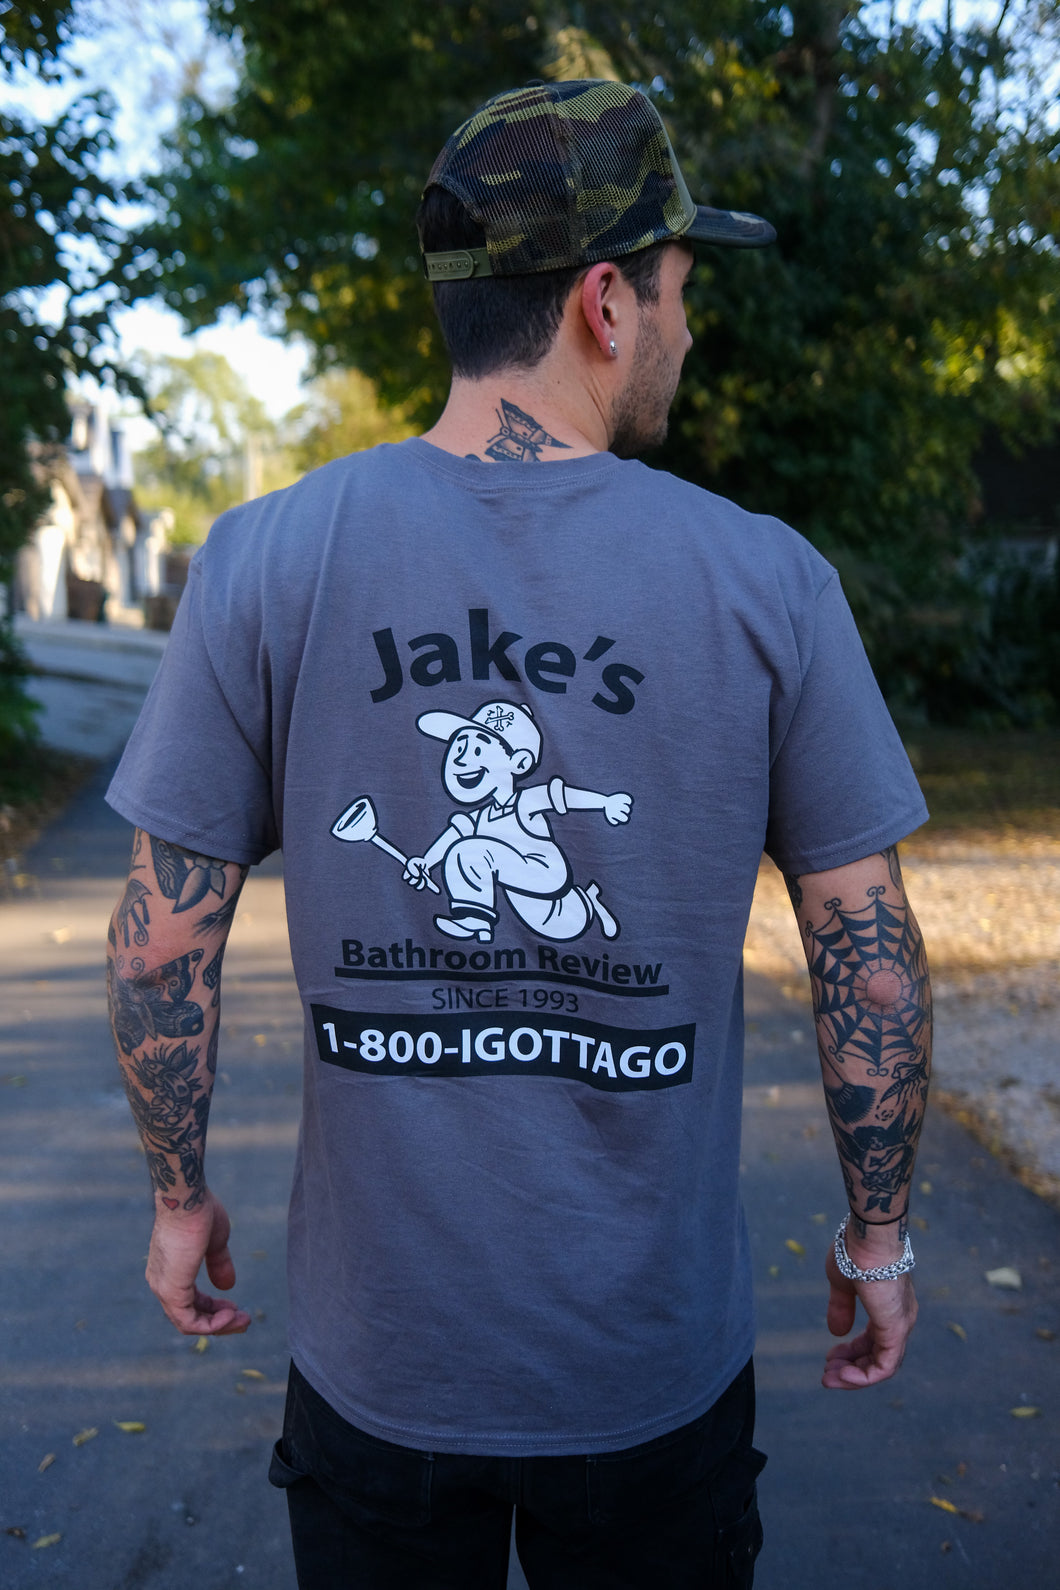 Jake's Bathroom Review T-shirt